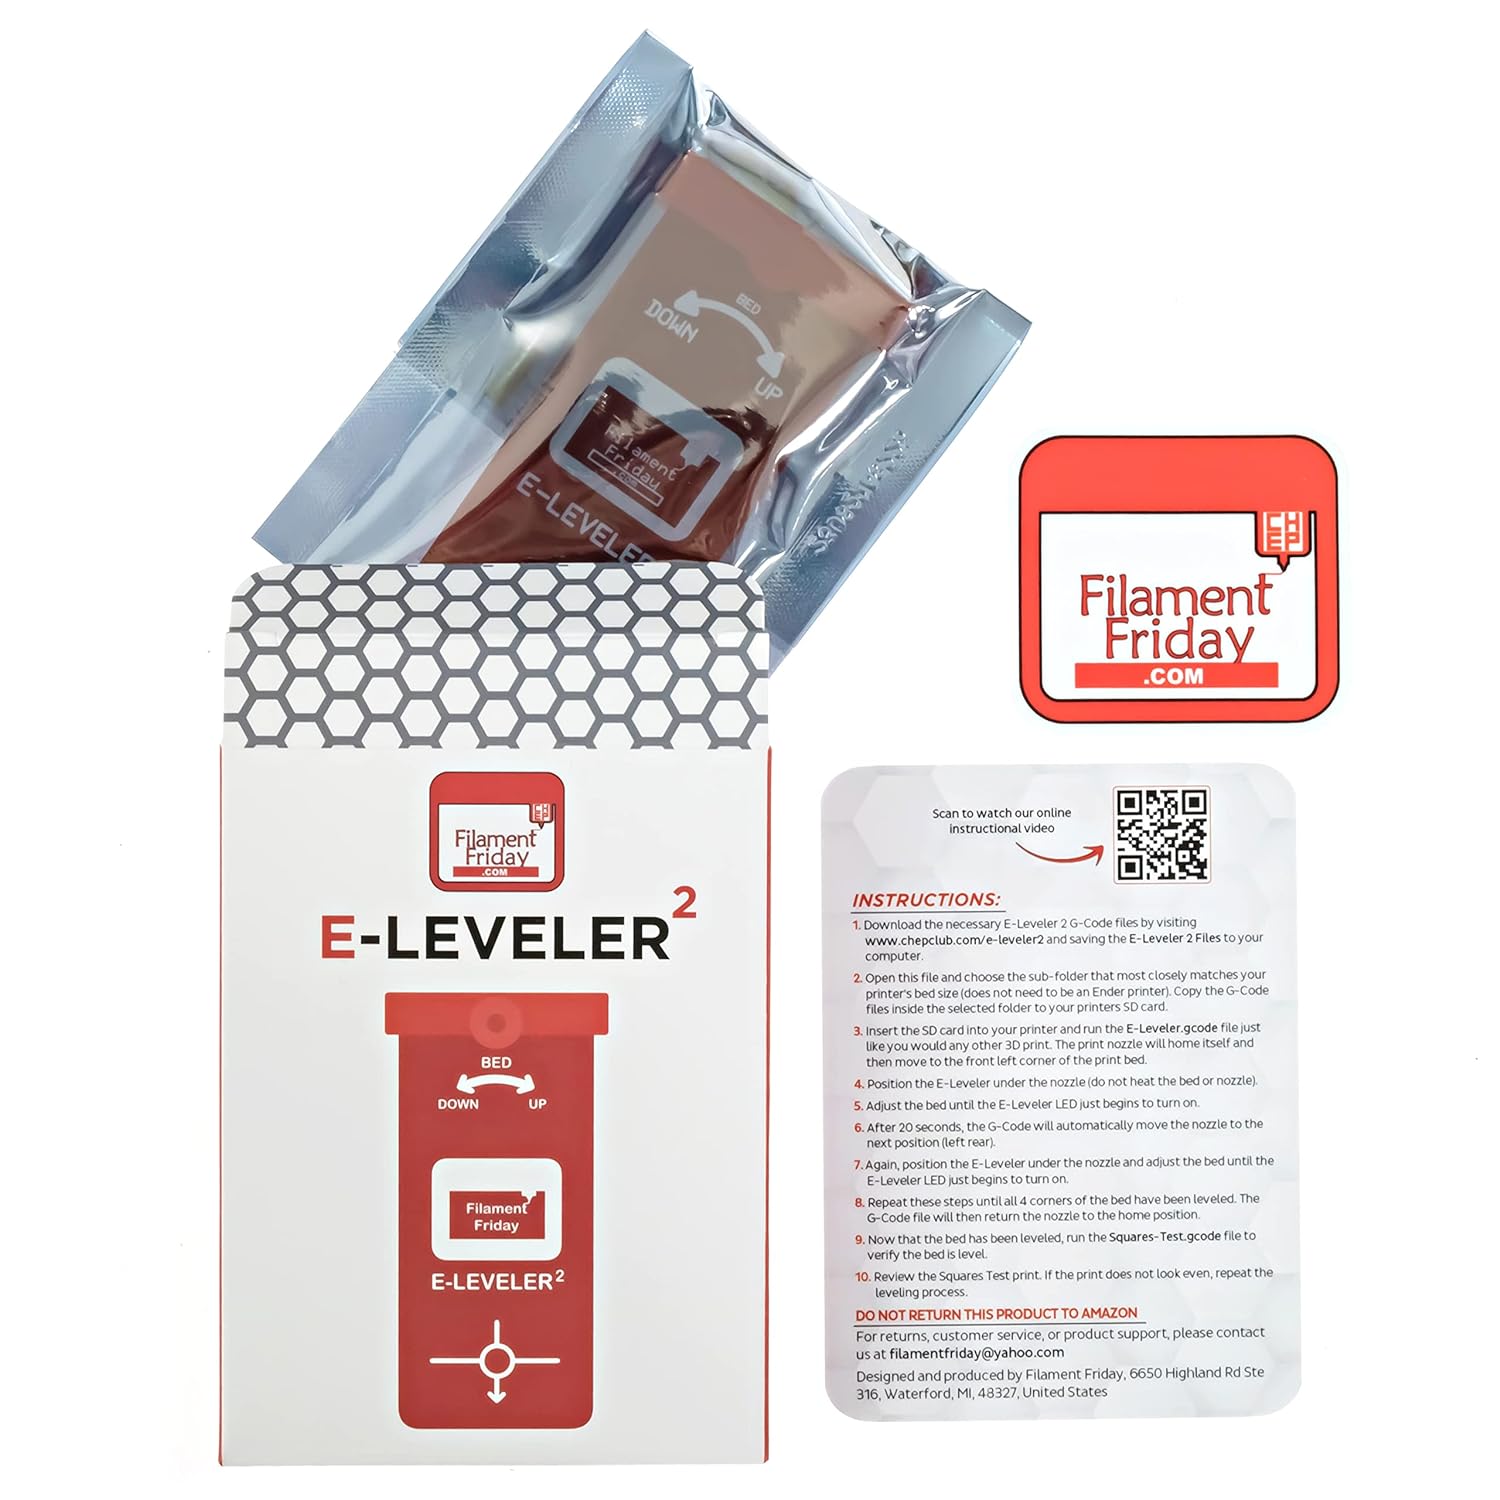 filament-friday-e-leveler-2-the-original-3d-printer-electronic-bed-leveling-tool-2 Filament Friday E-Leveler 2 Review